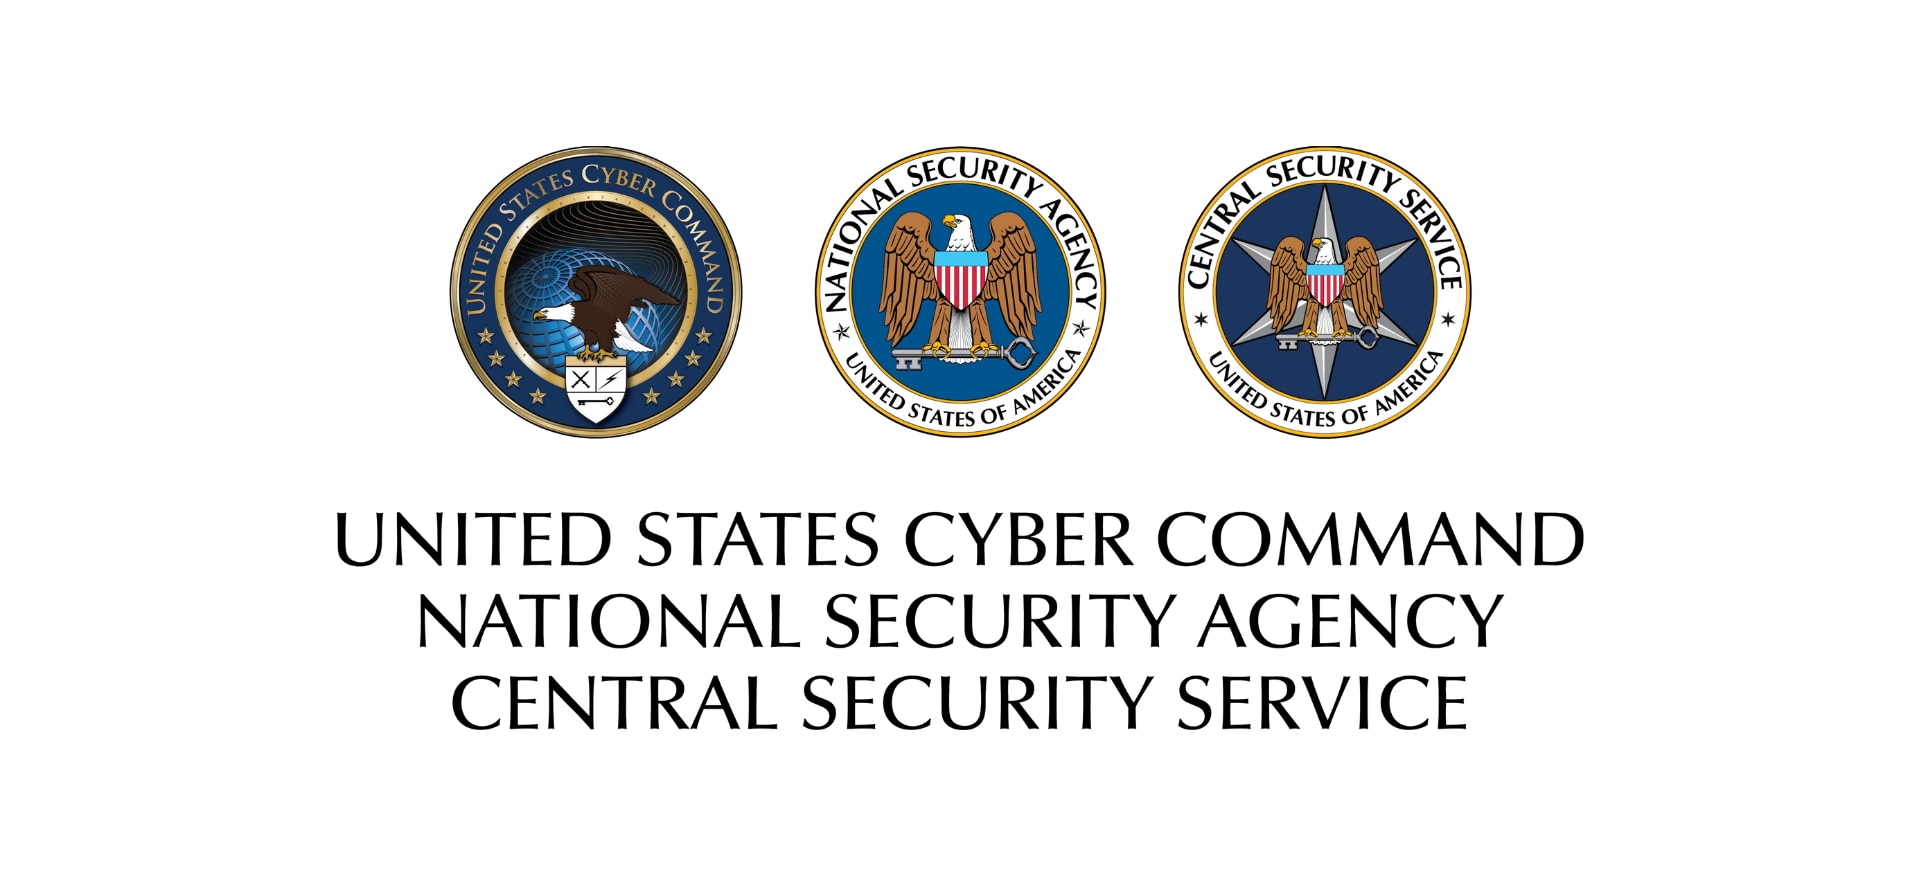 USCC, NSA, CSS Seals